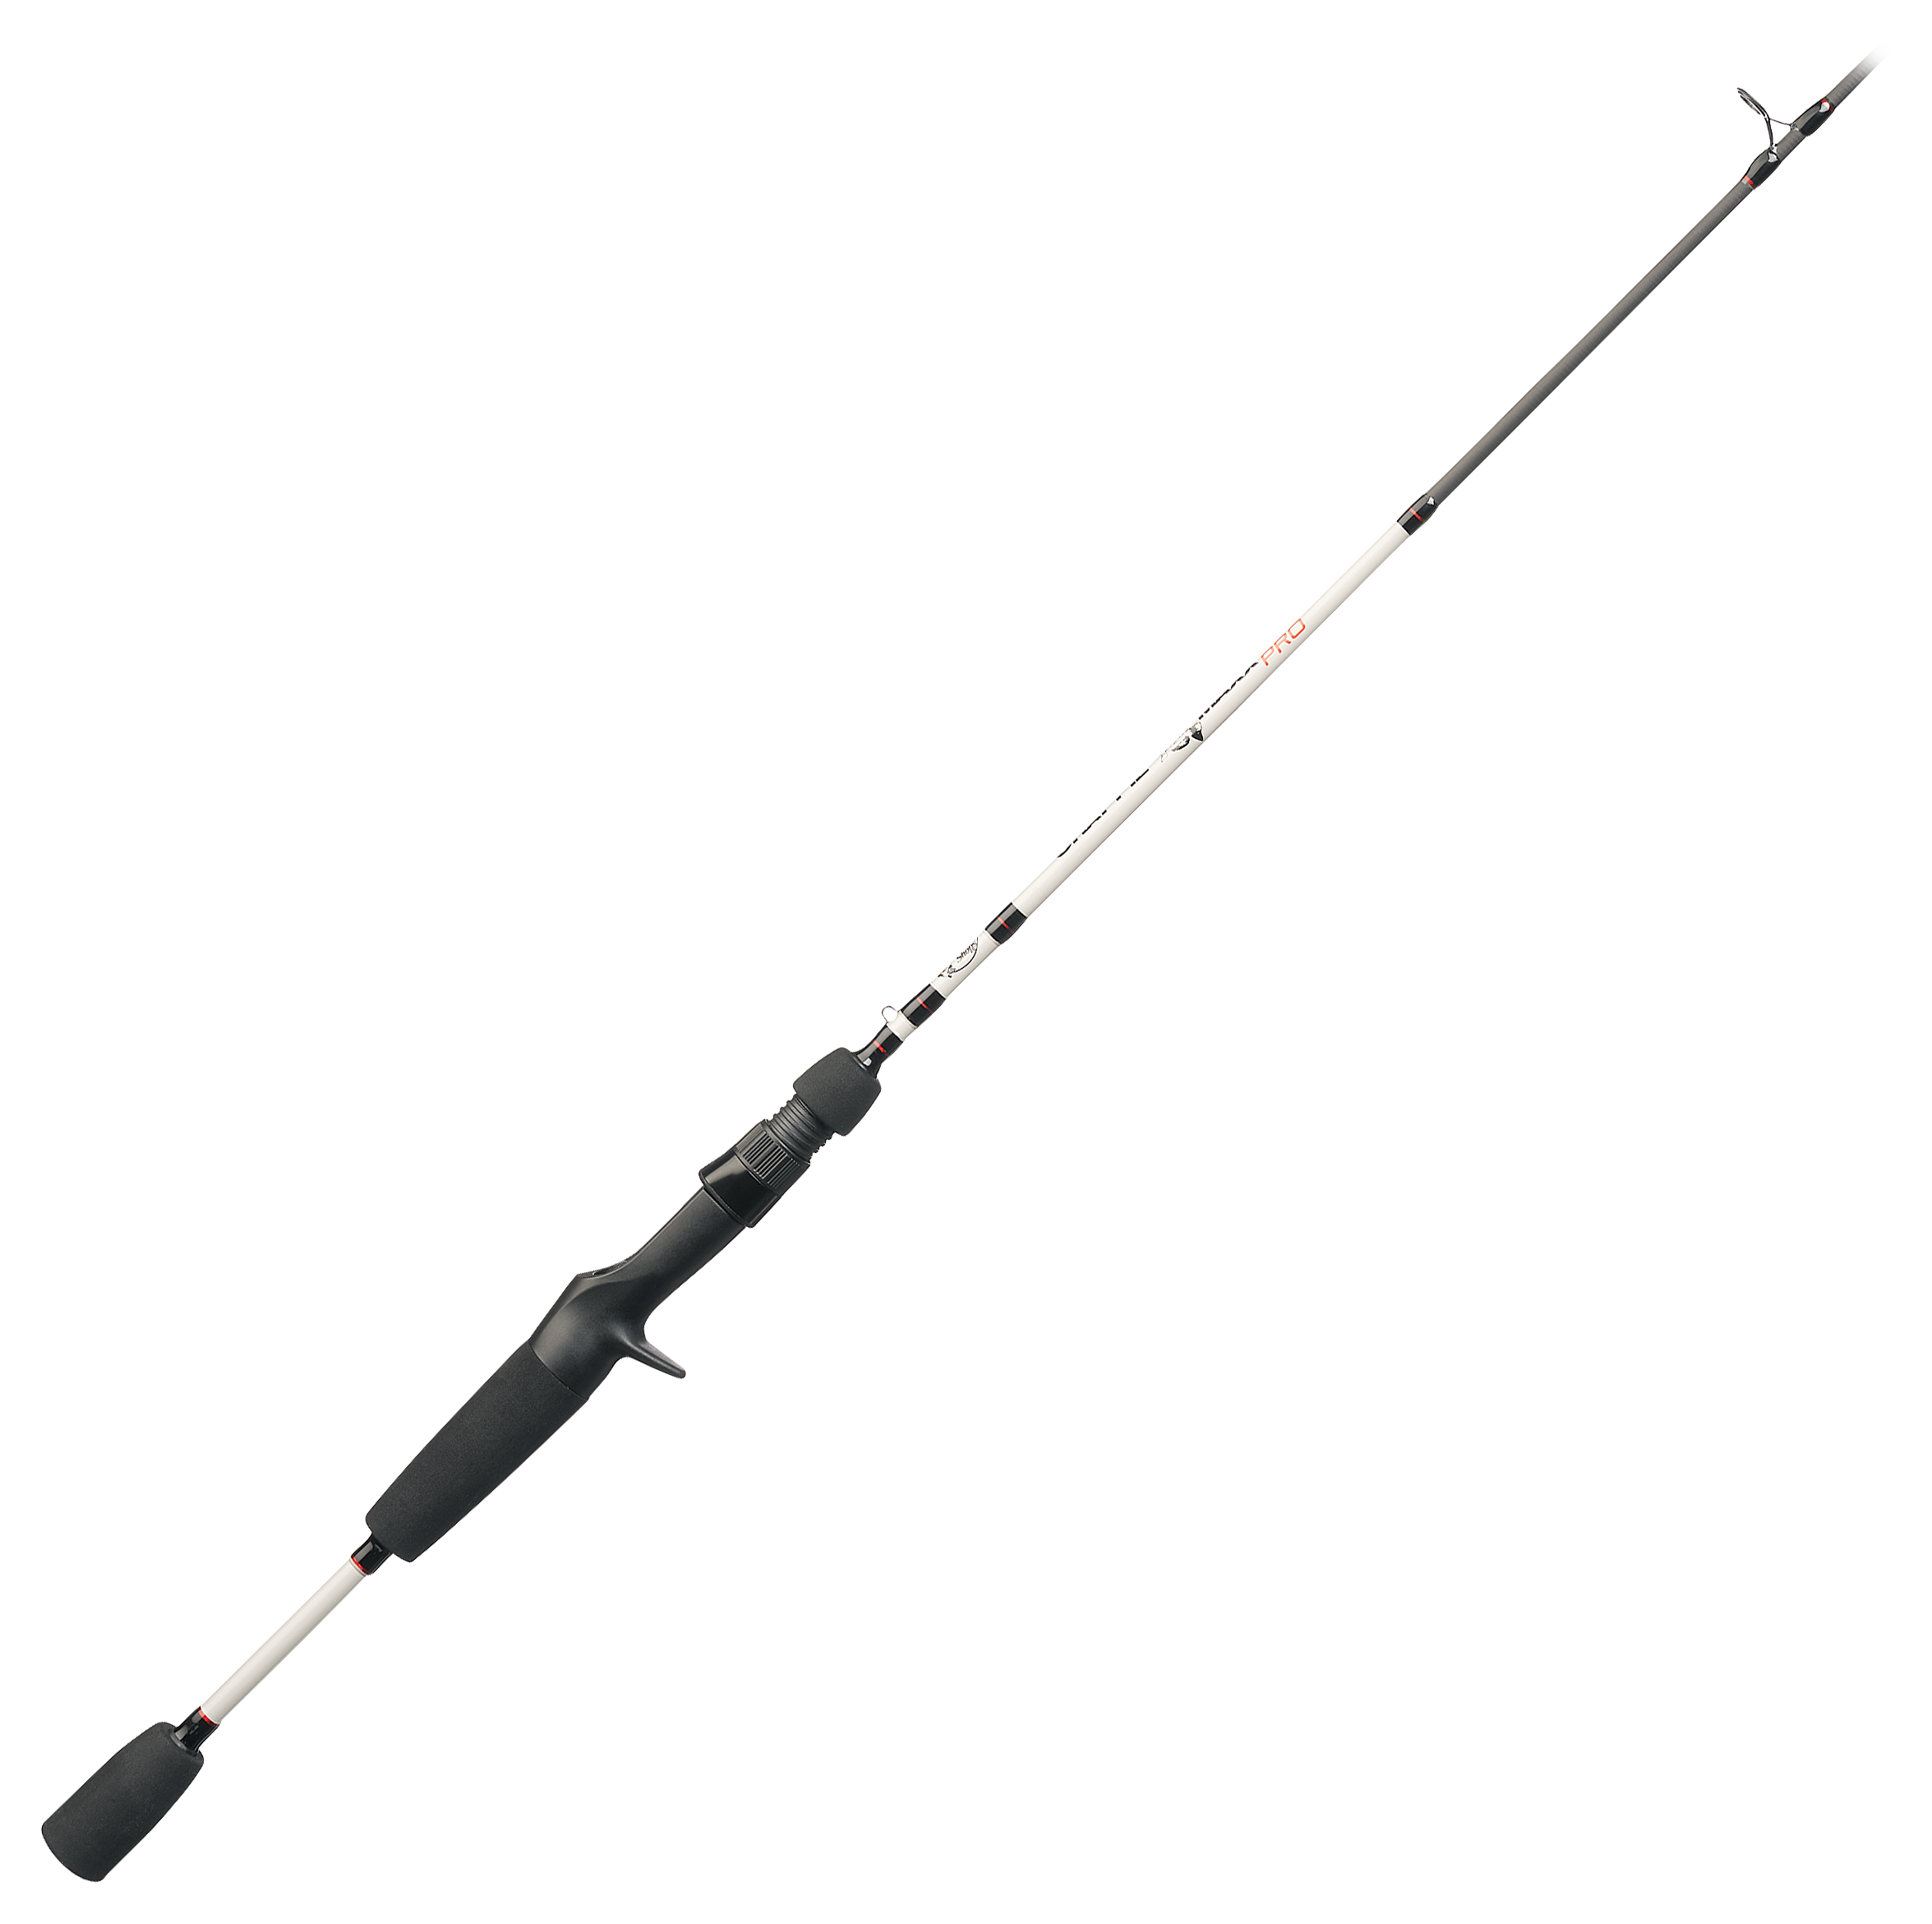 Bass Pro Shops Crappie Maxx Pro Series Crappie Casting Rod